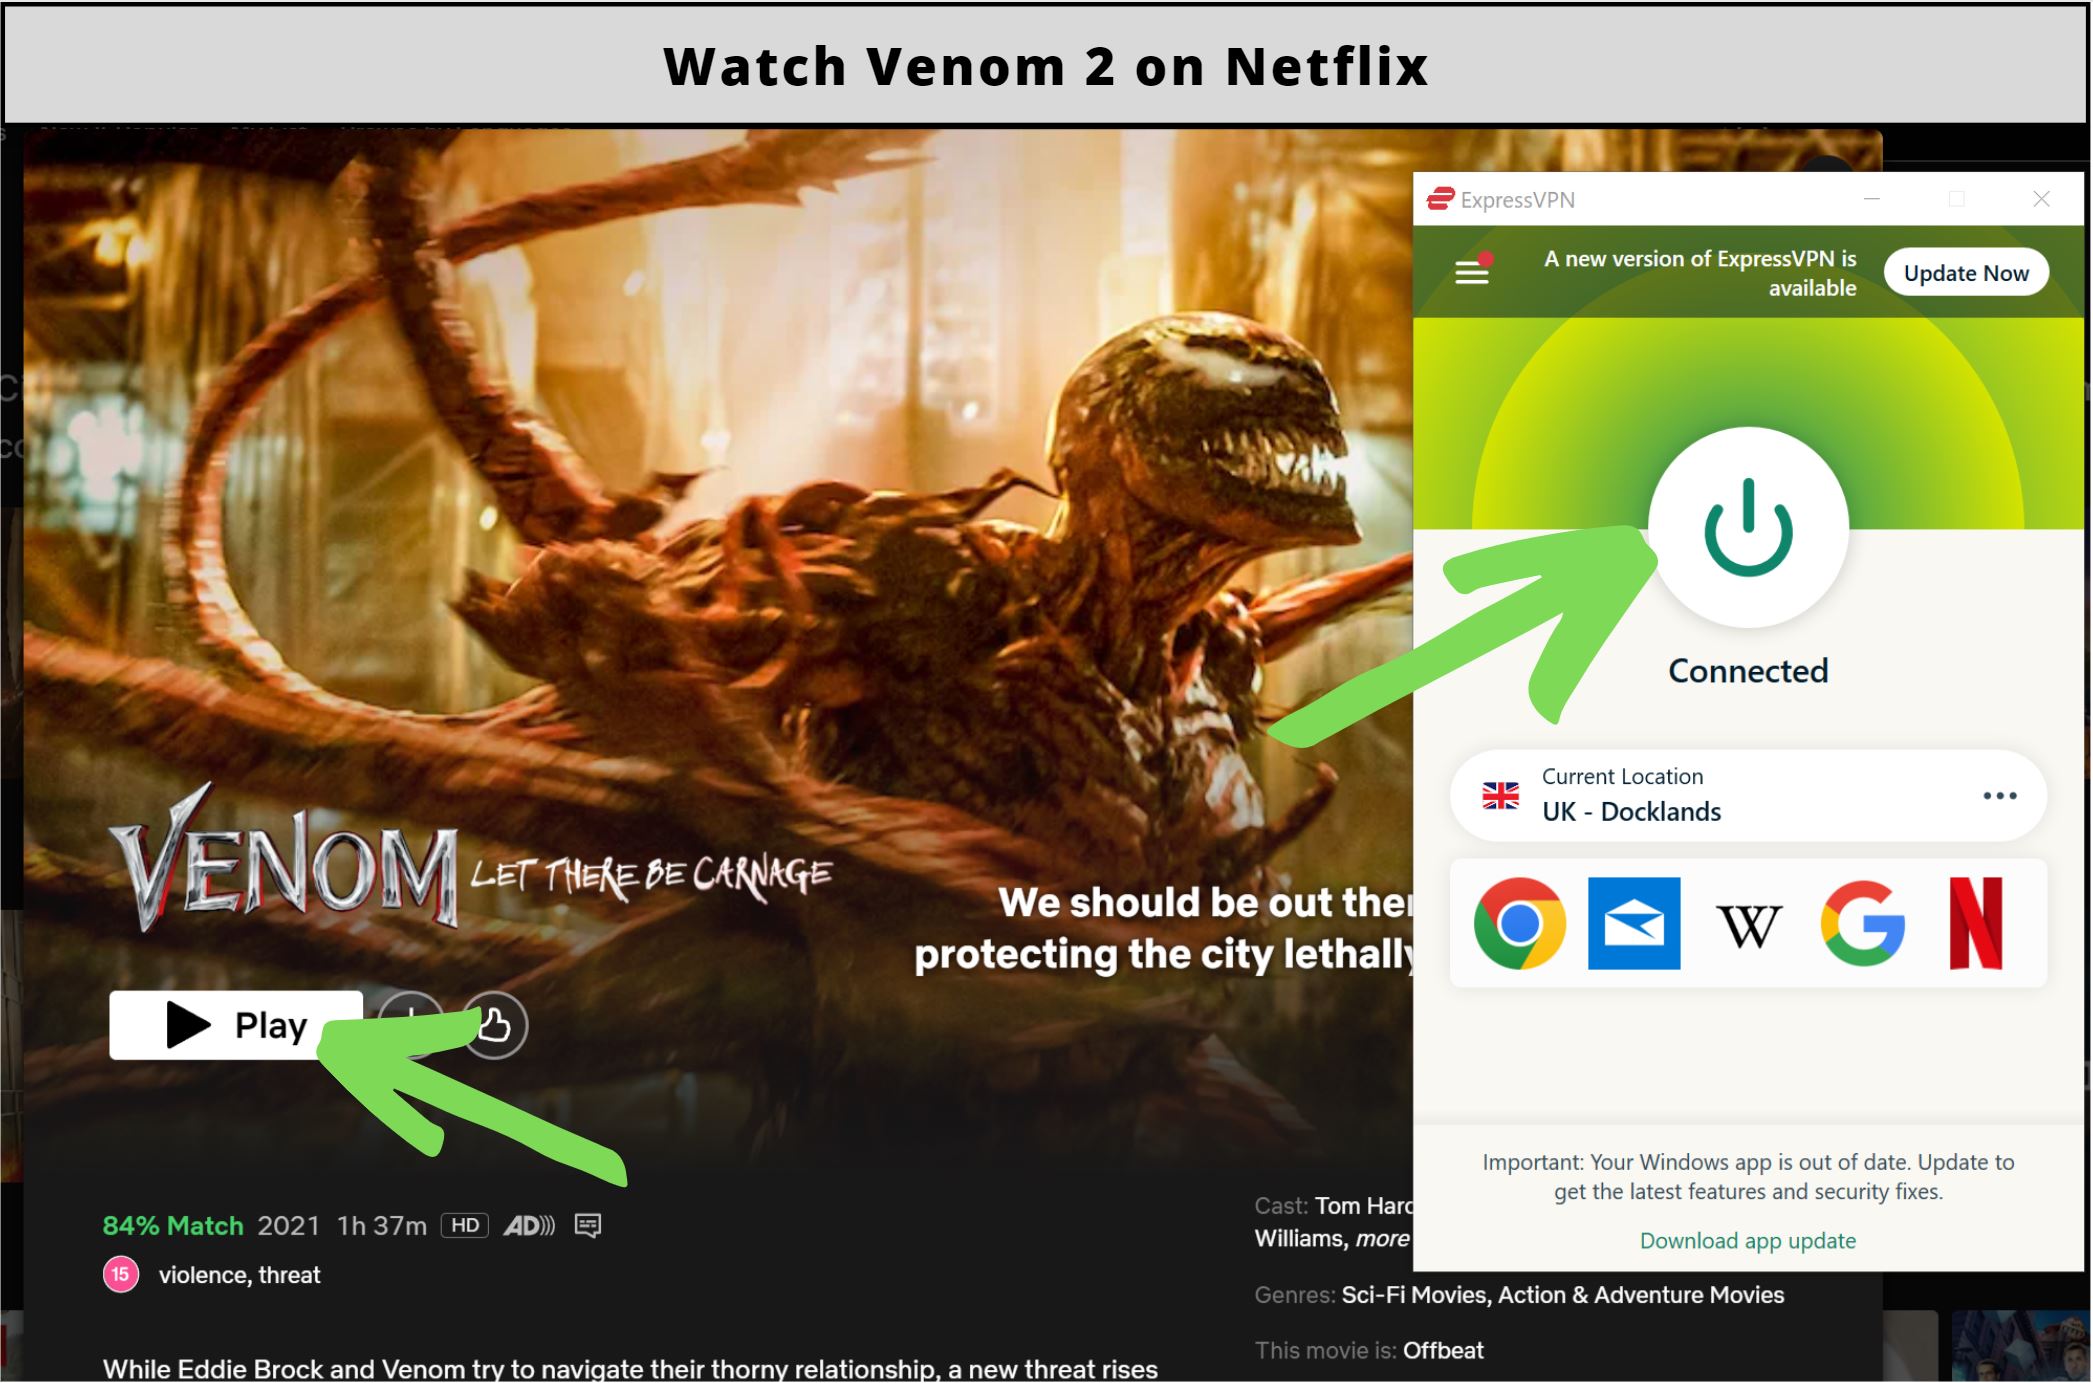 How to watch Venom 2 on Netflix